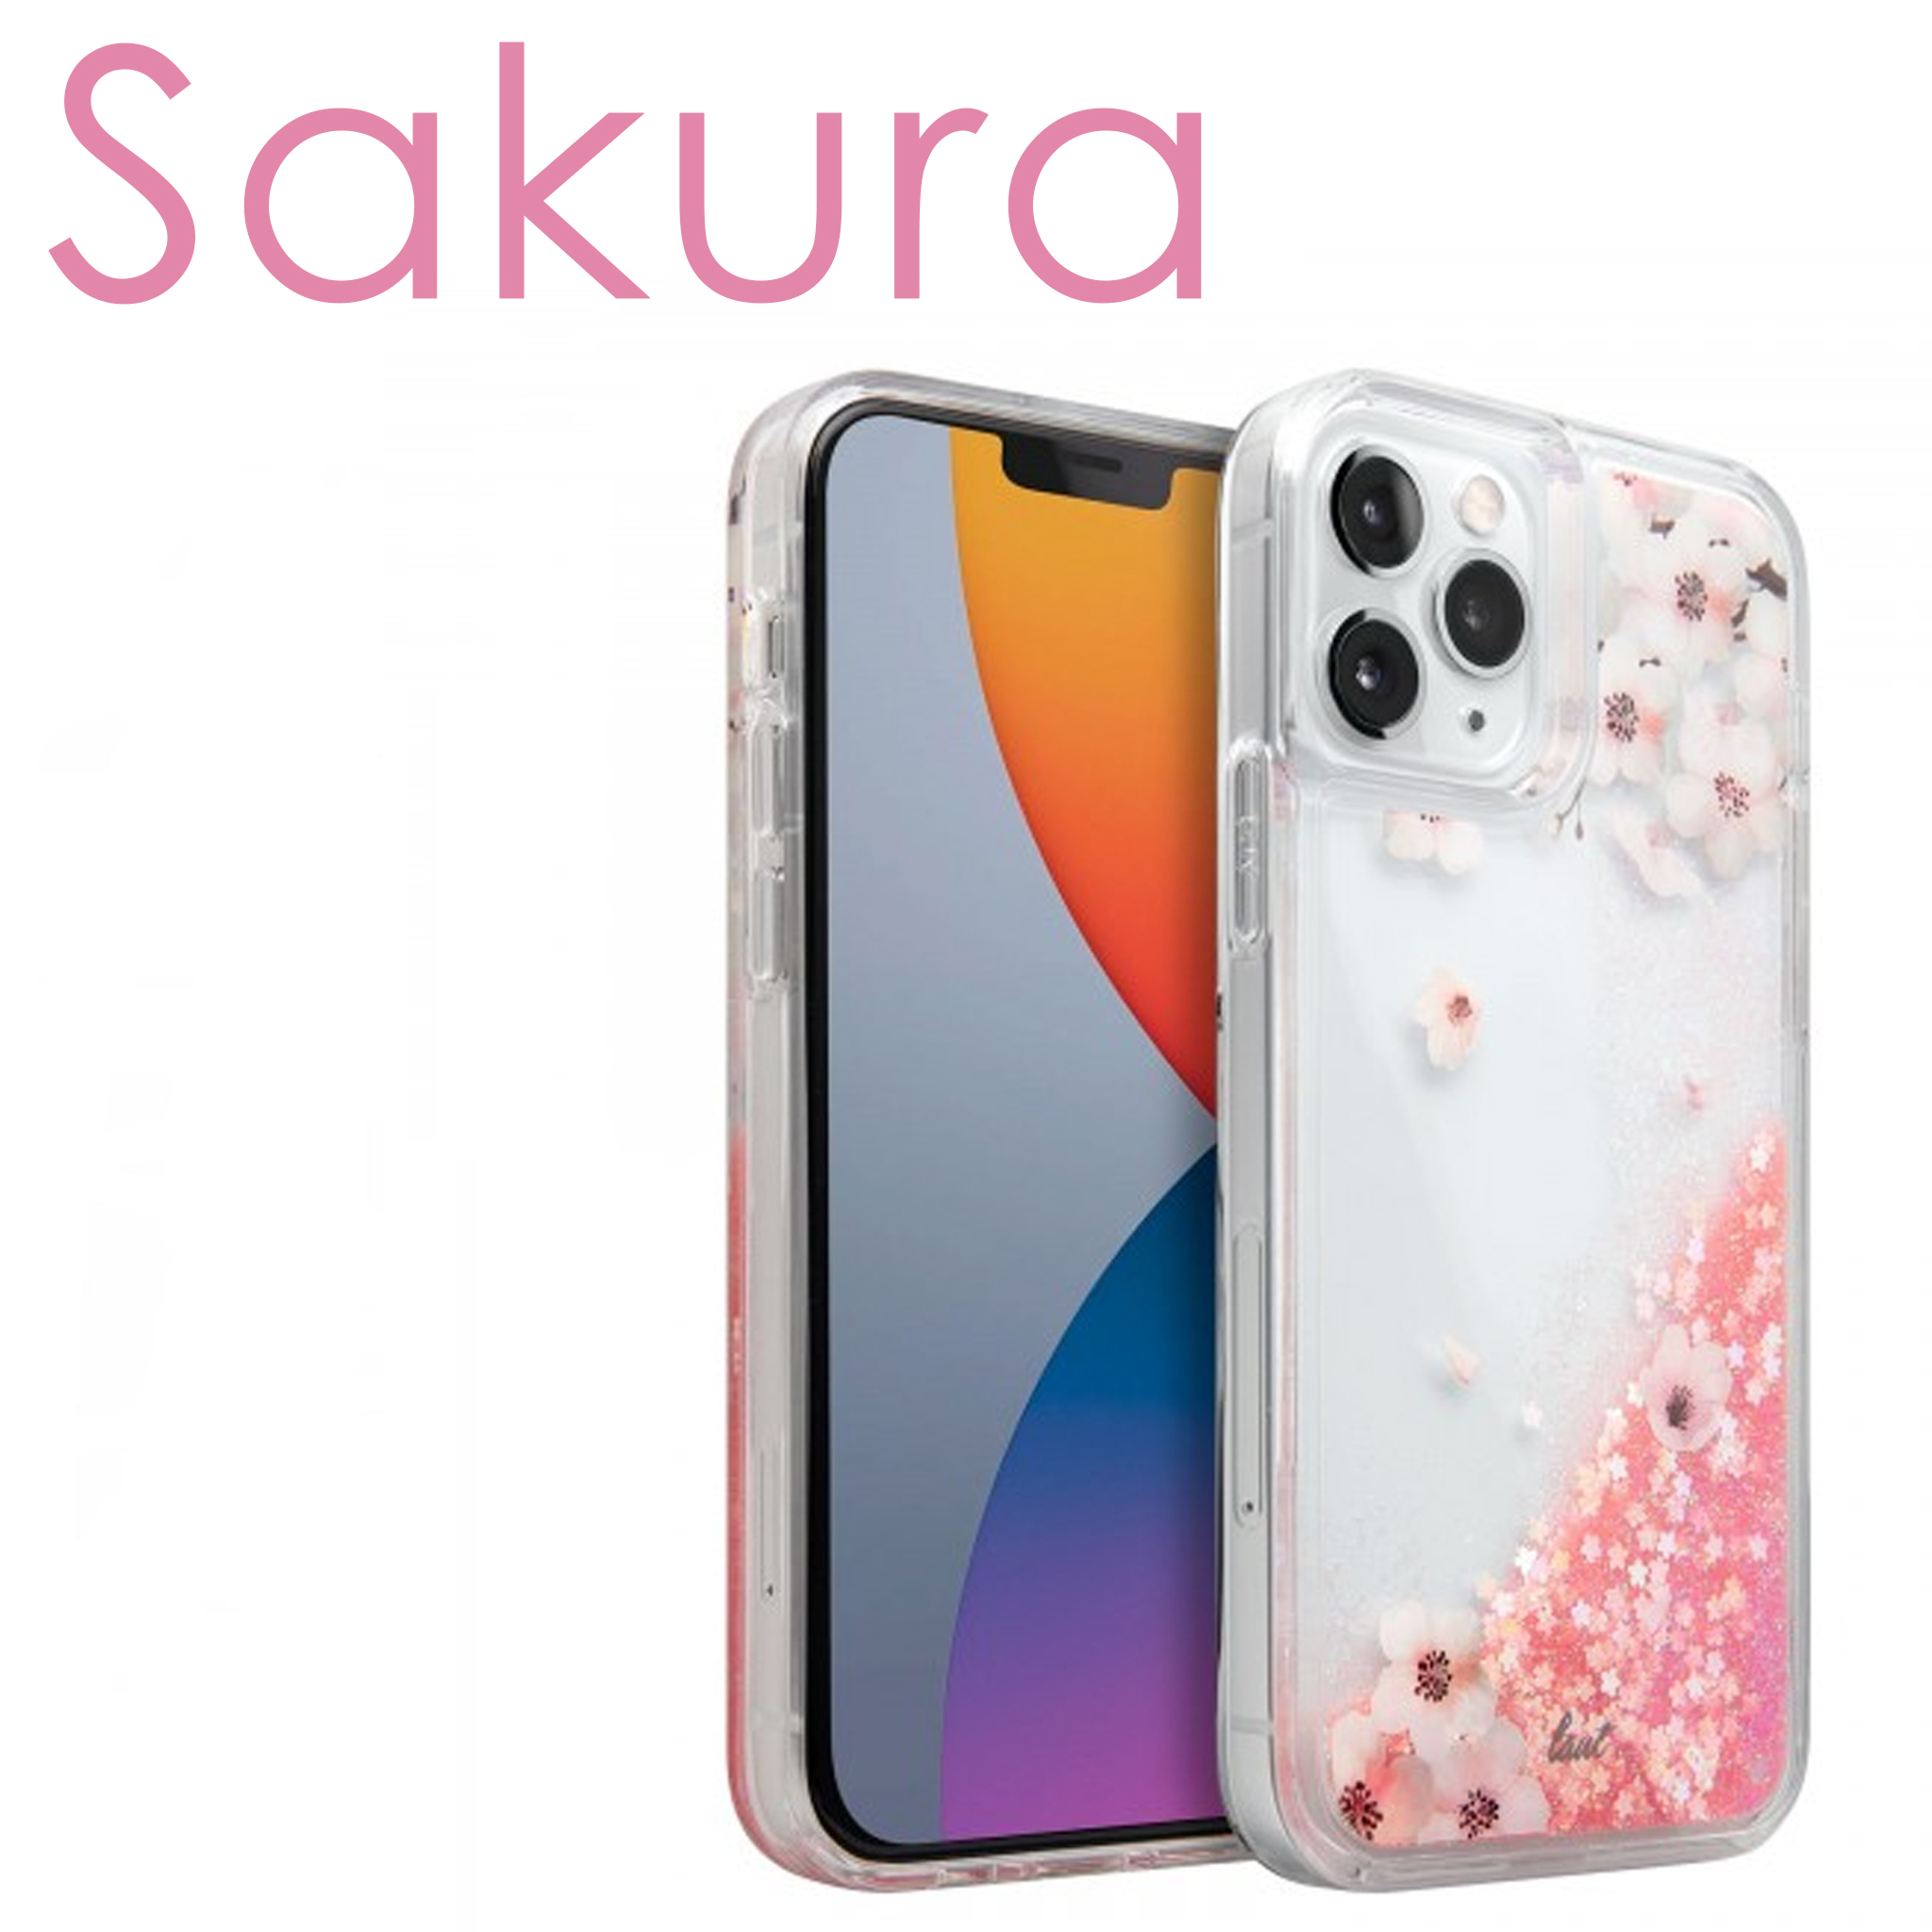 LAUT เคสกันกระแทก สำหรับ iPhone 12 mini / 12 / 12 Pro / 12 Pro Max / 11 / 11 Pro ป้องกันรอยขีดข่วนให้กับตัวเครื่องได้ดี สี Sakura สี Sakuraรูปแบบรุ่นที่ีรองรับ iPhone 12/12 Pro